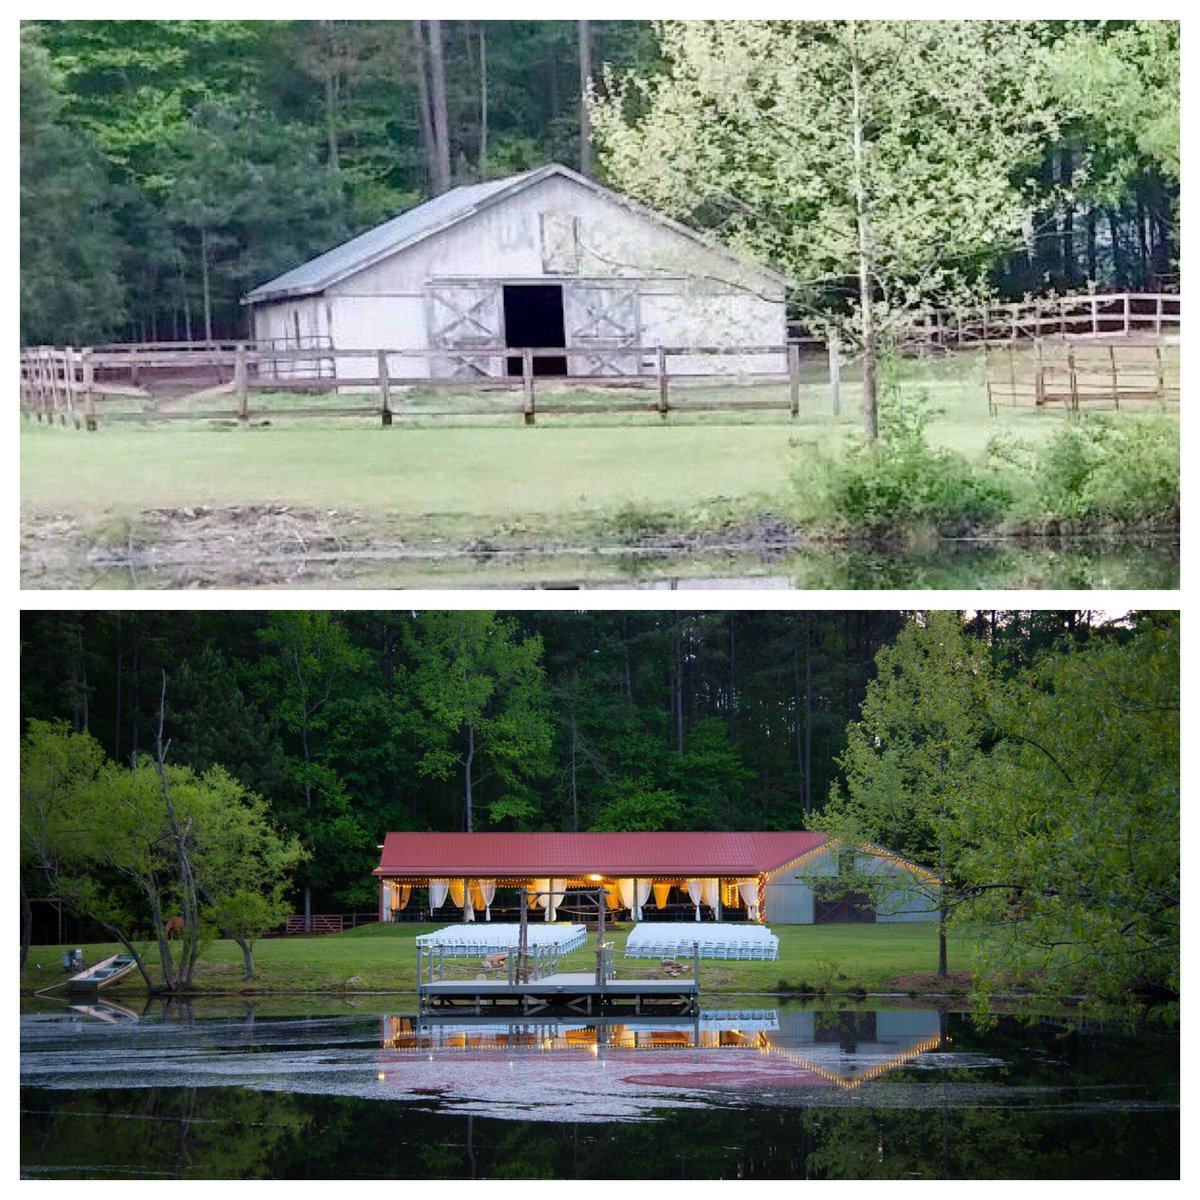 Morris Peaceland Farm from 1999 to present day! #TransformationTuesday #mpf #weddingvenuesofnc #memoriesmadehere #raleighwedding #barnwedding #rusticwedding